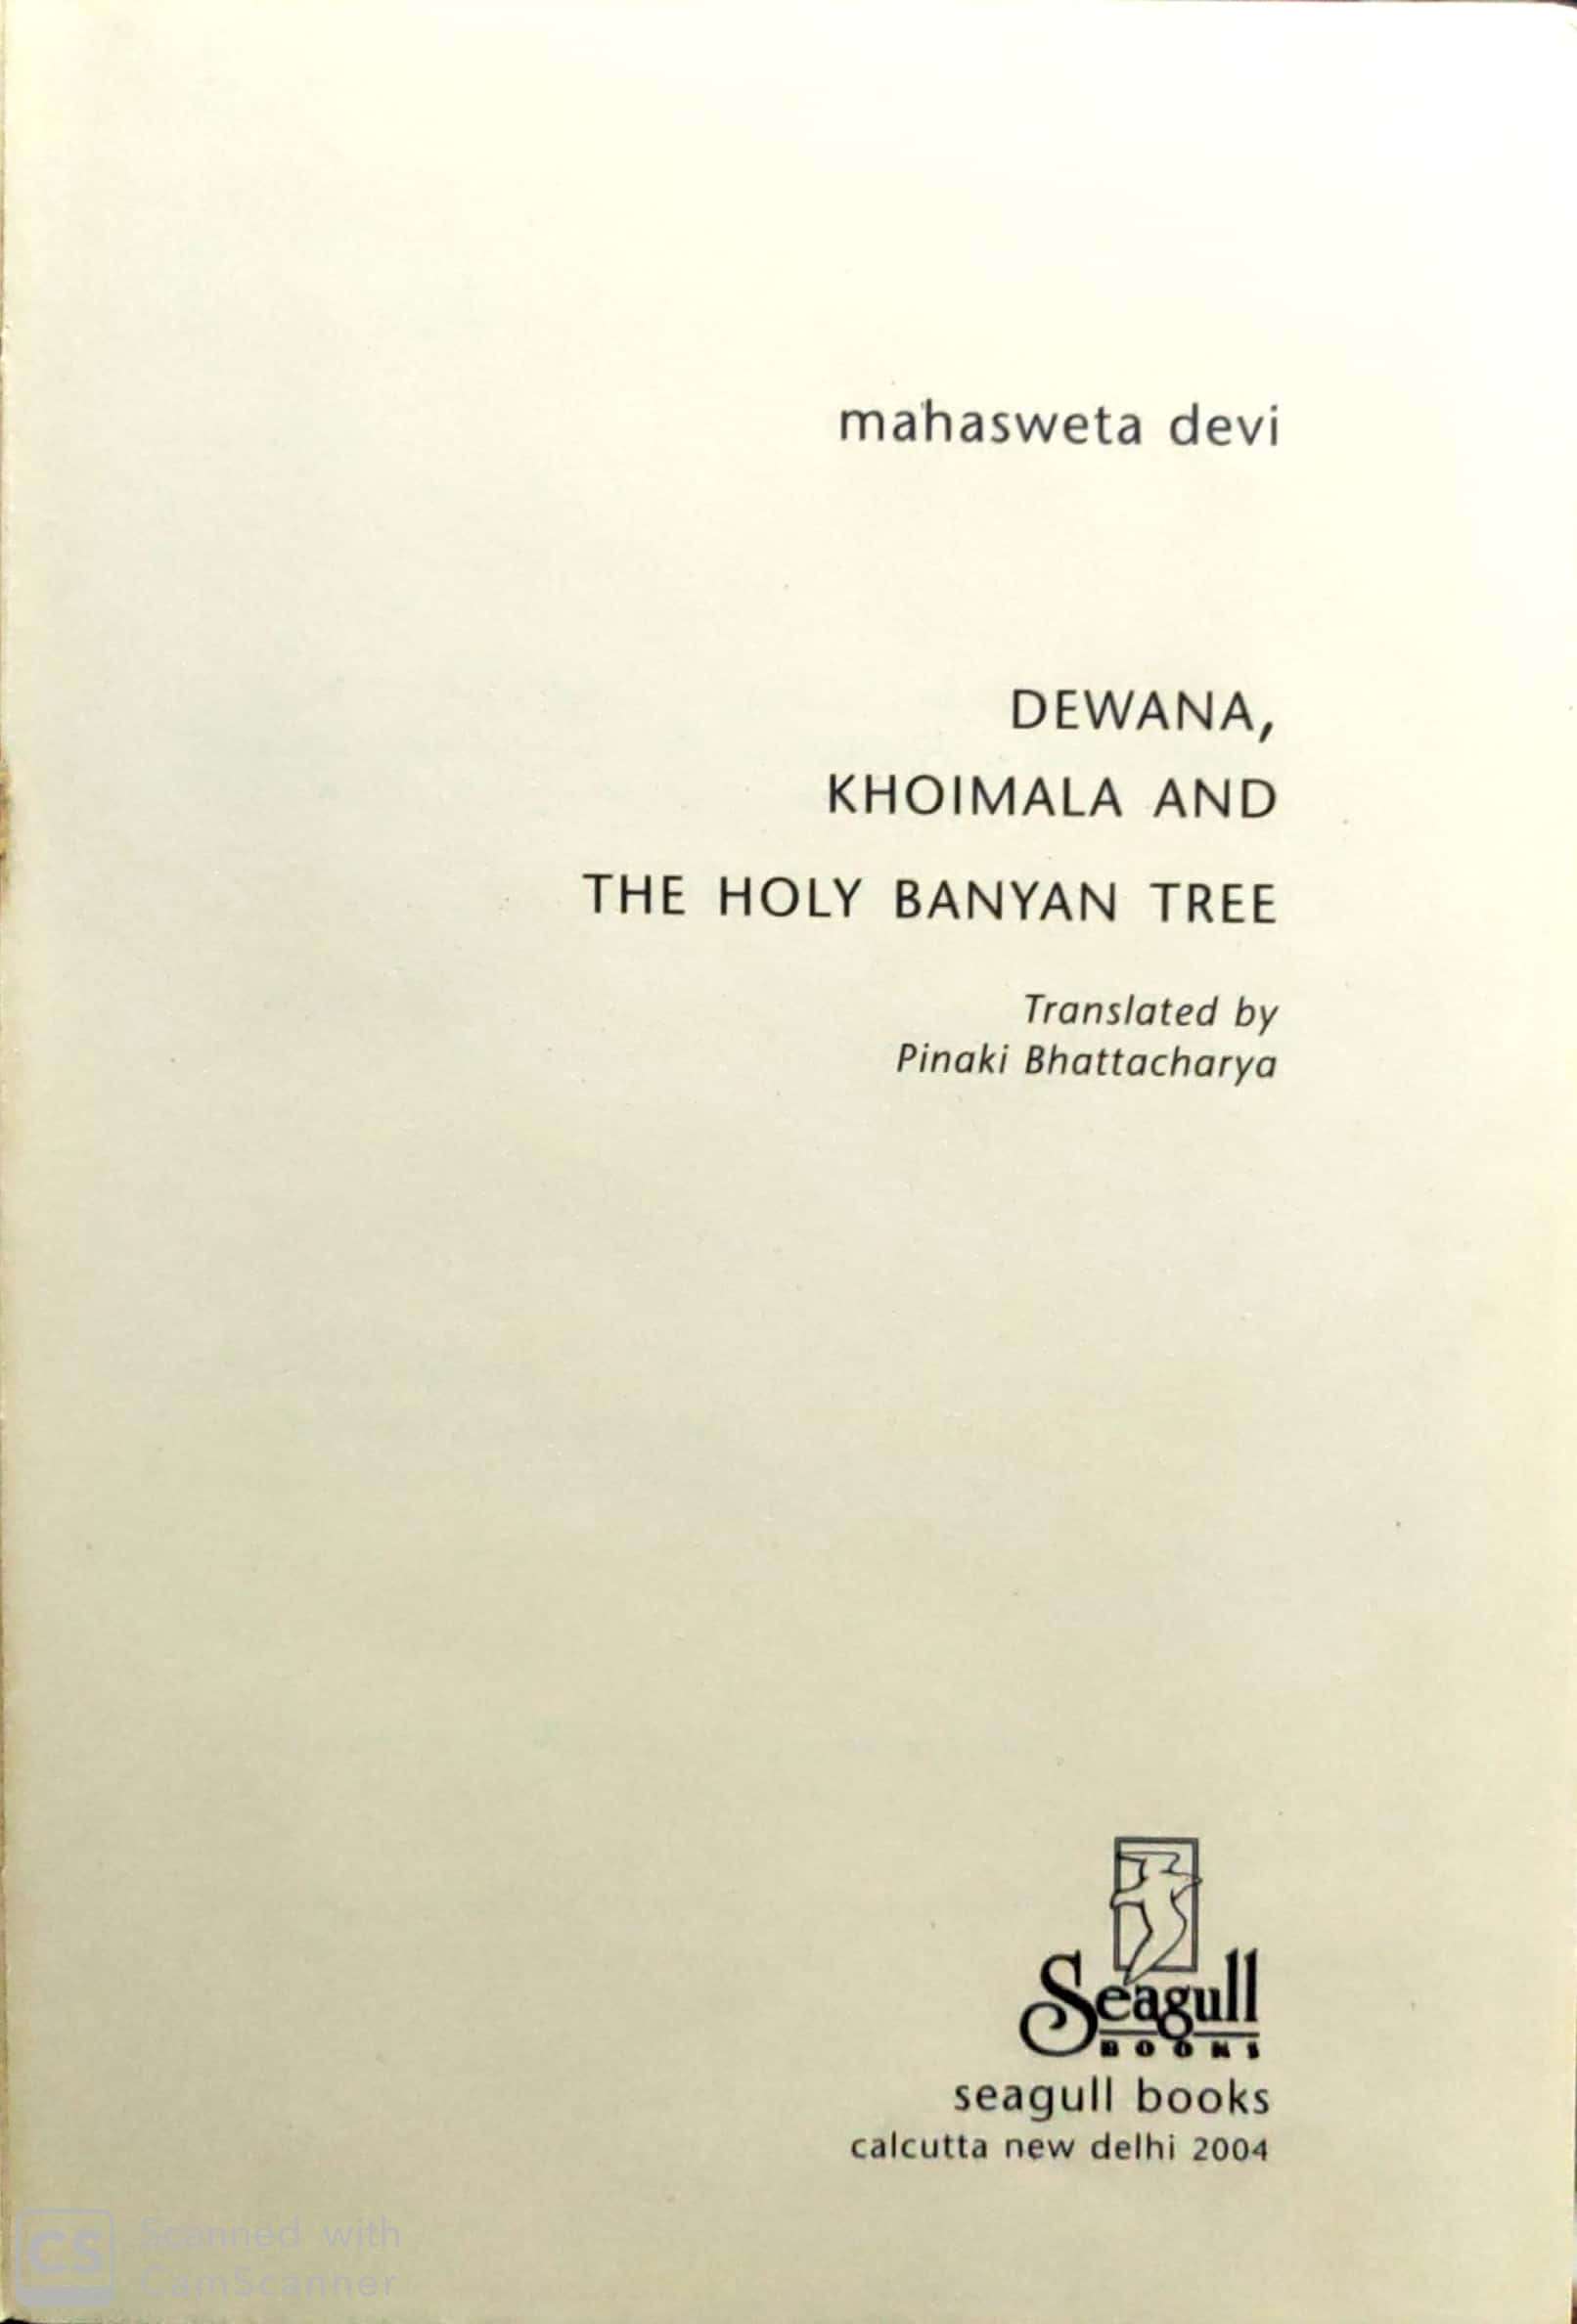 Dewana, Khoimala and the Holy Banyan Tree